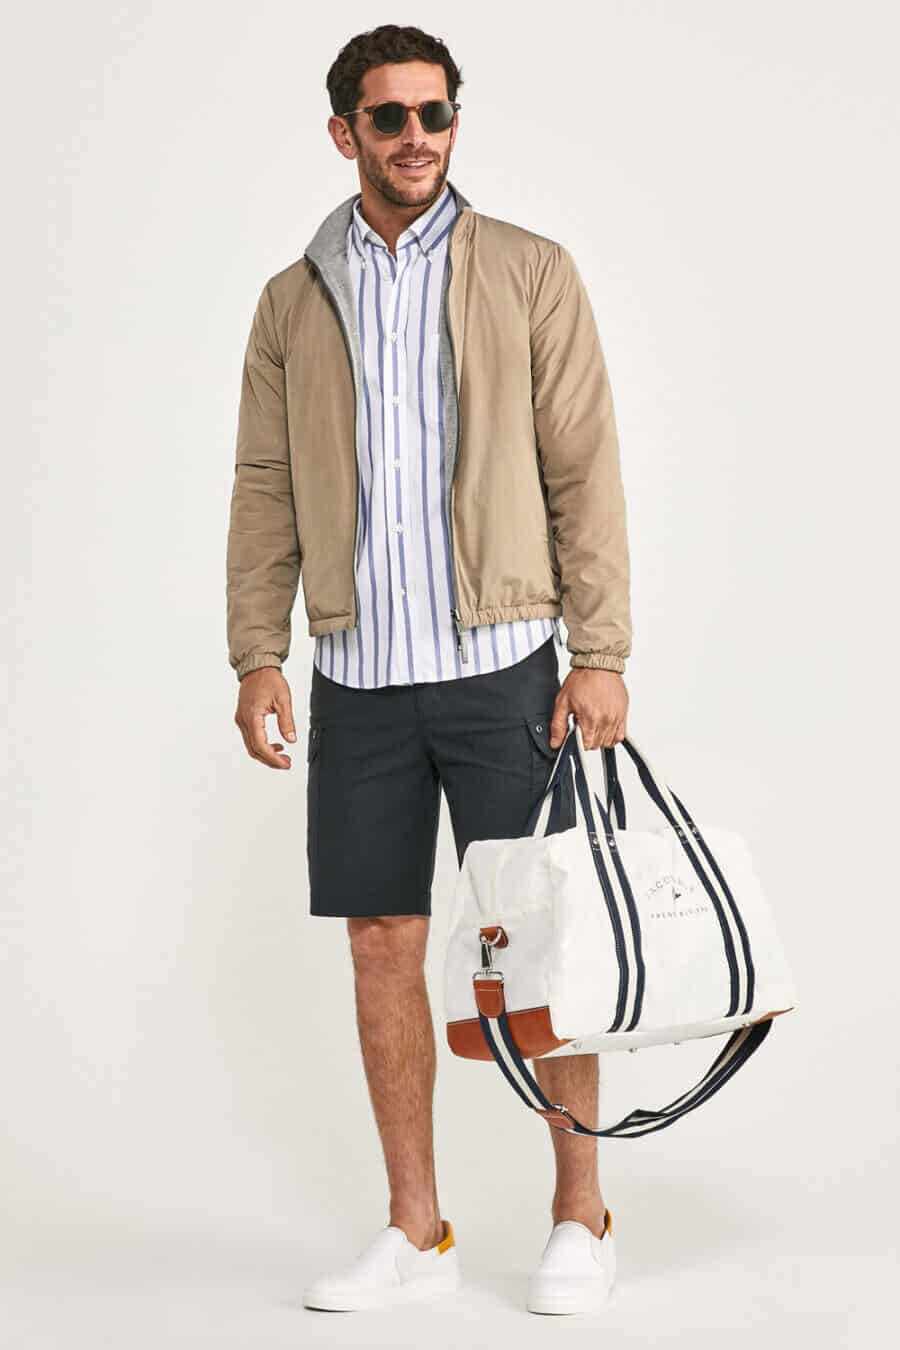 Men's slim cargo shorts, striped shirt and Harrington jacket outfit